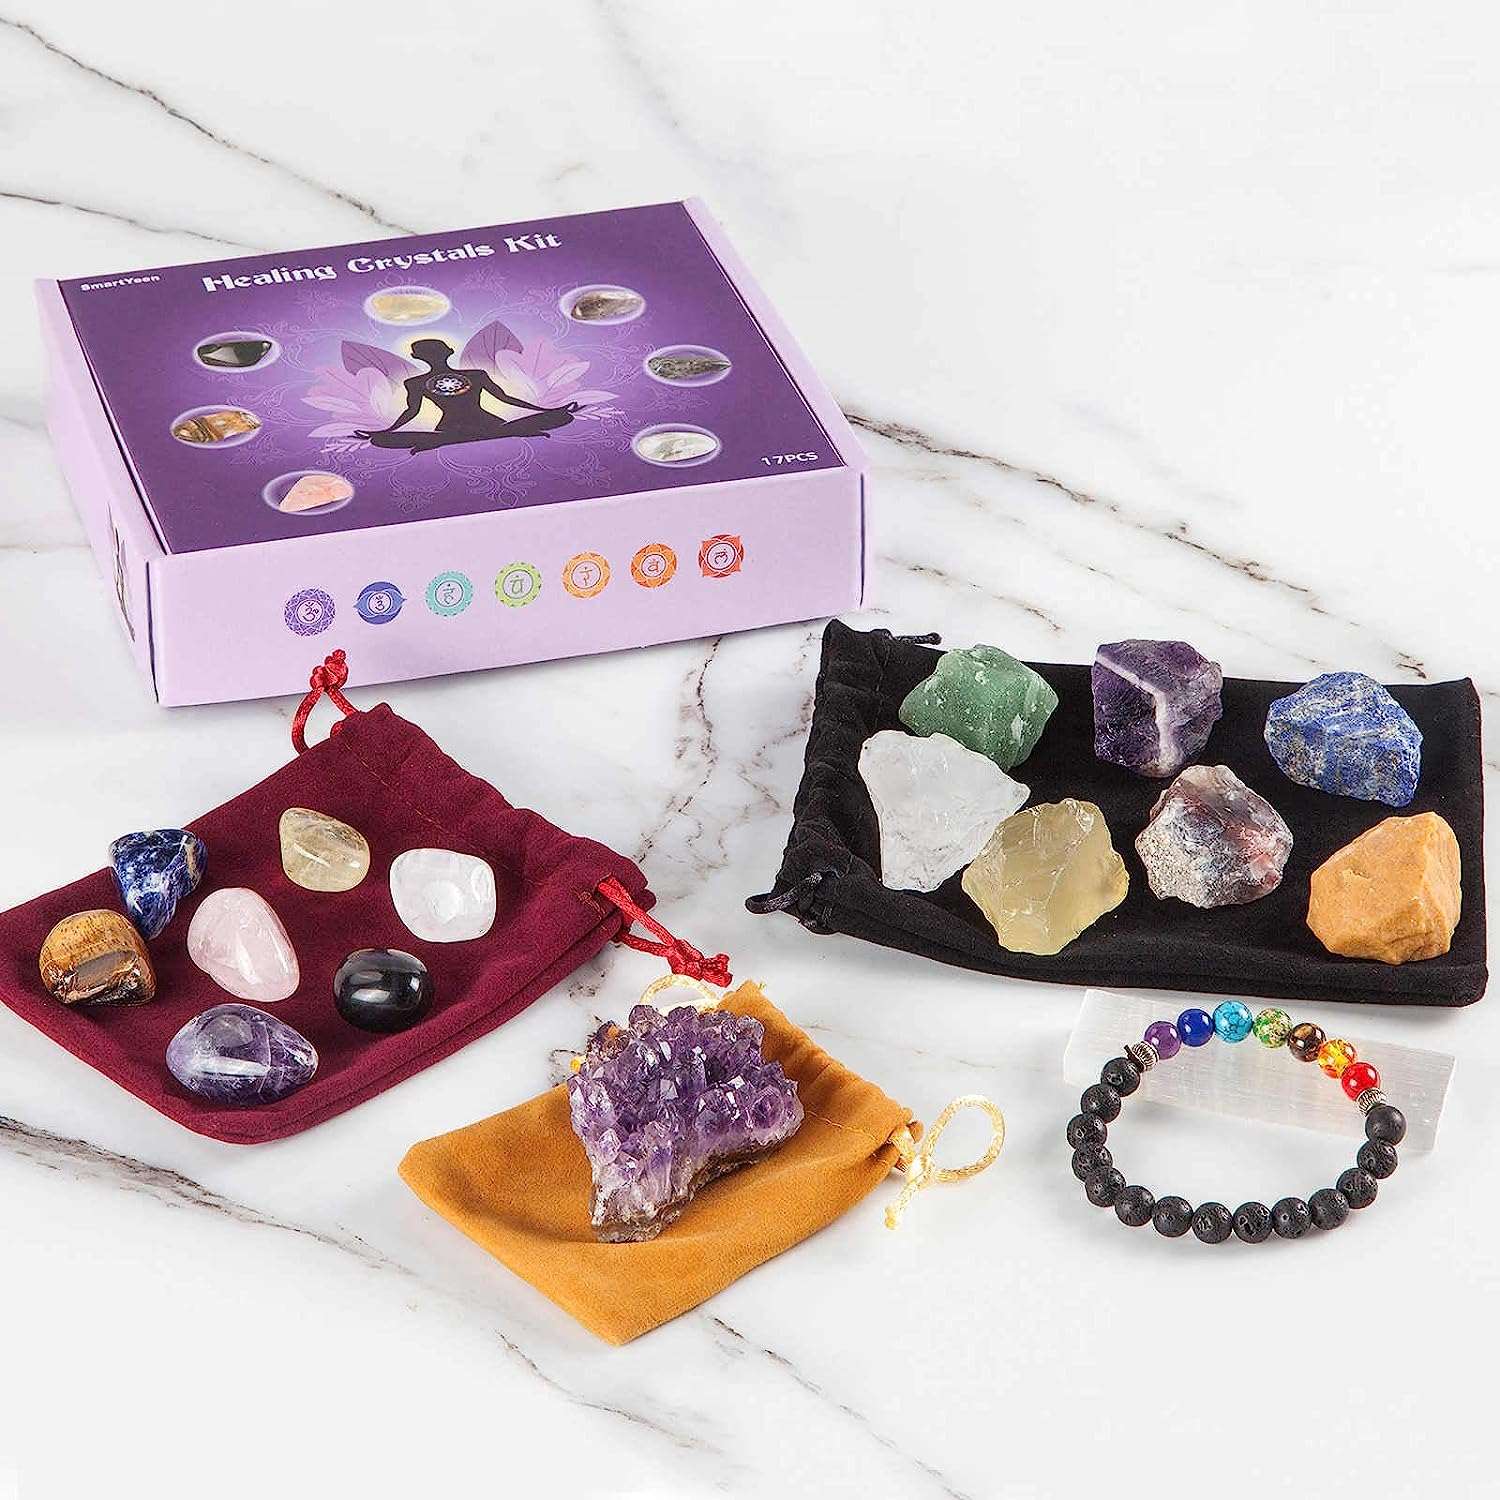 Healing Crystals Set, 17PCS Crystal Healing Stones Kit for Yoga, Meditation